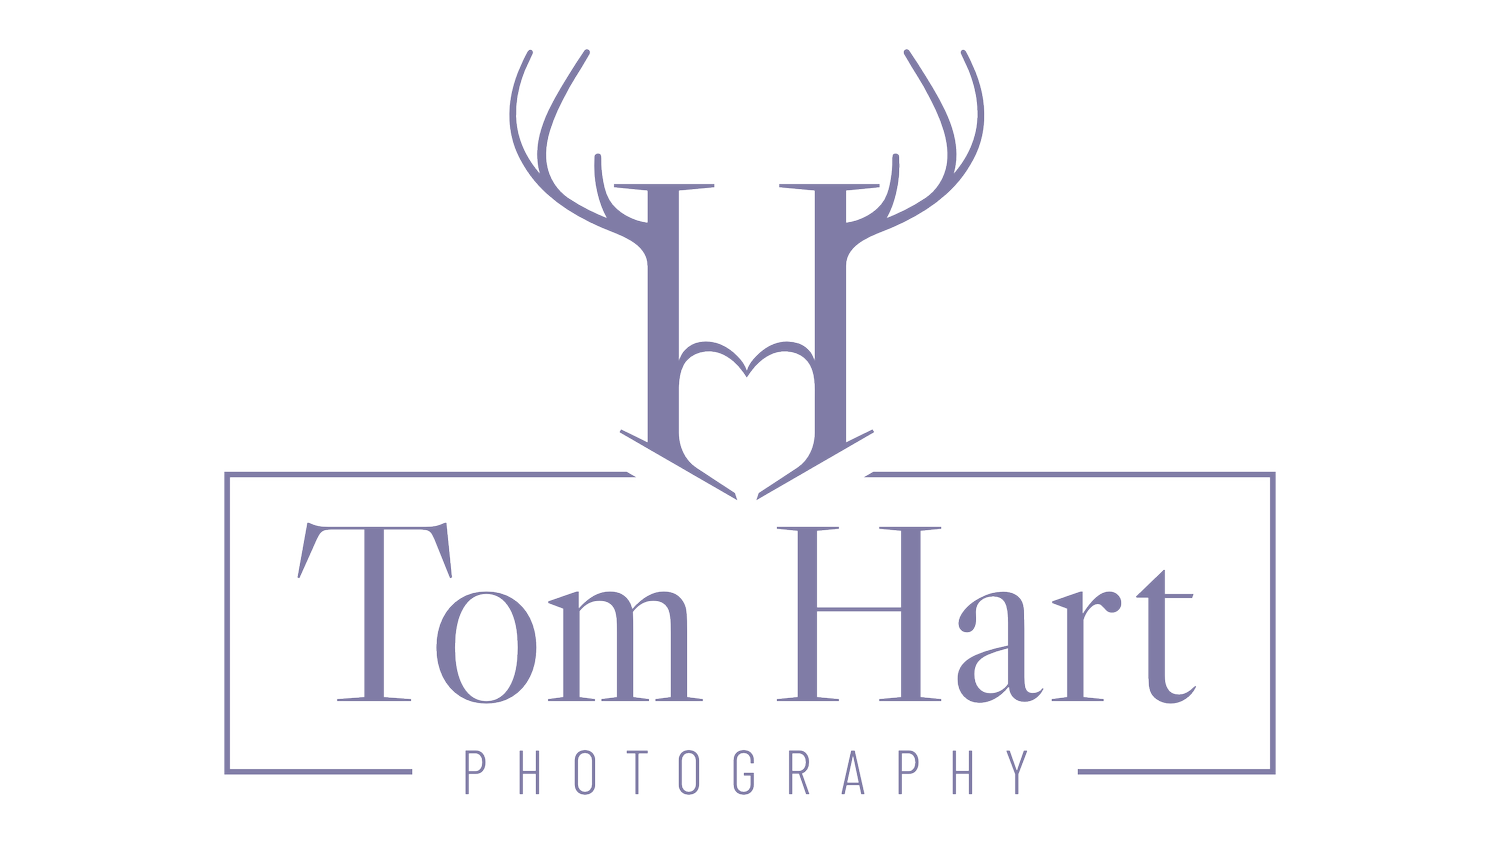 Tom Hart Photography